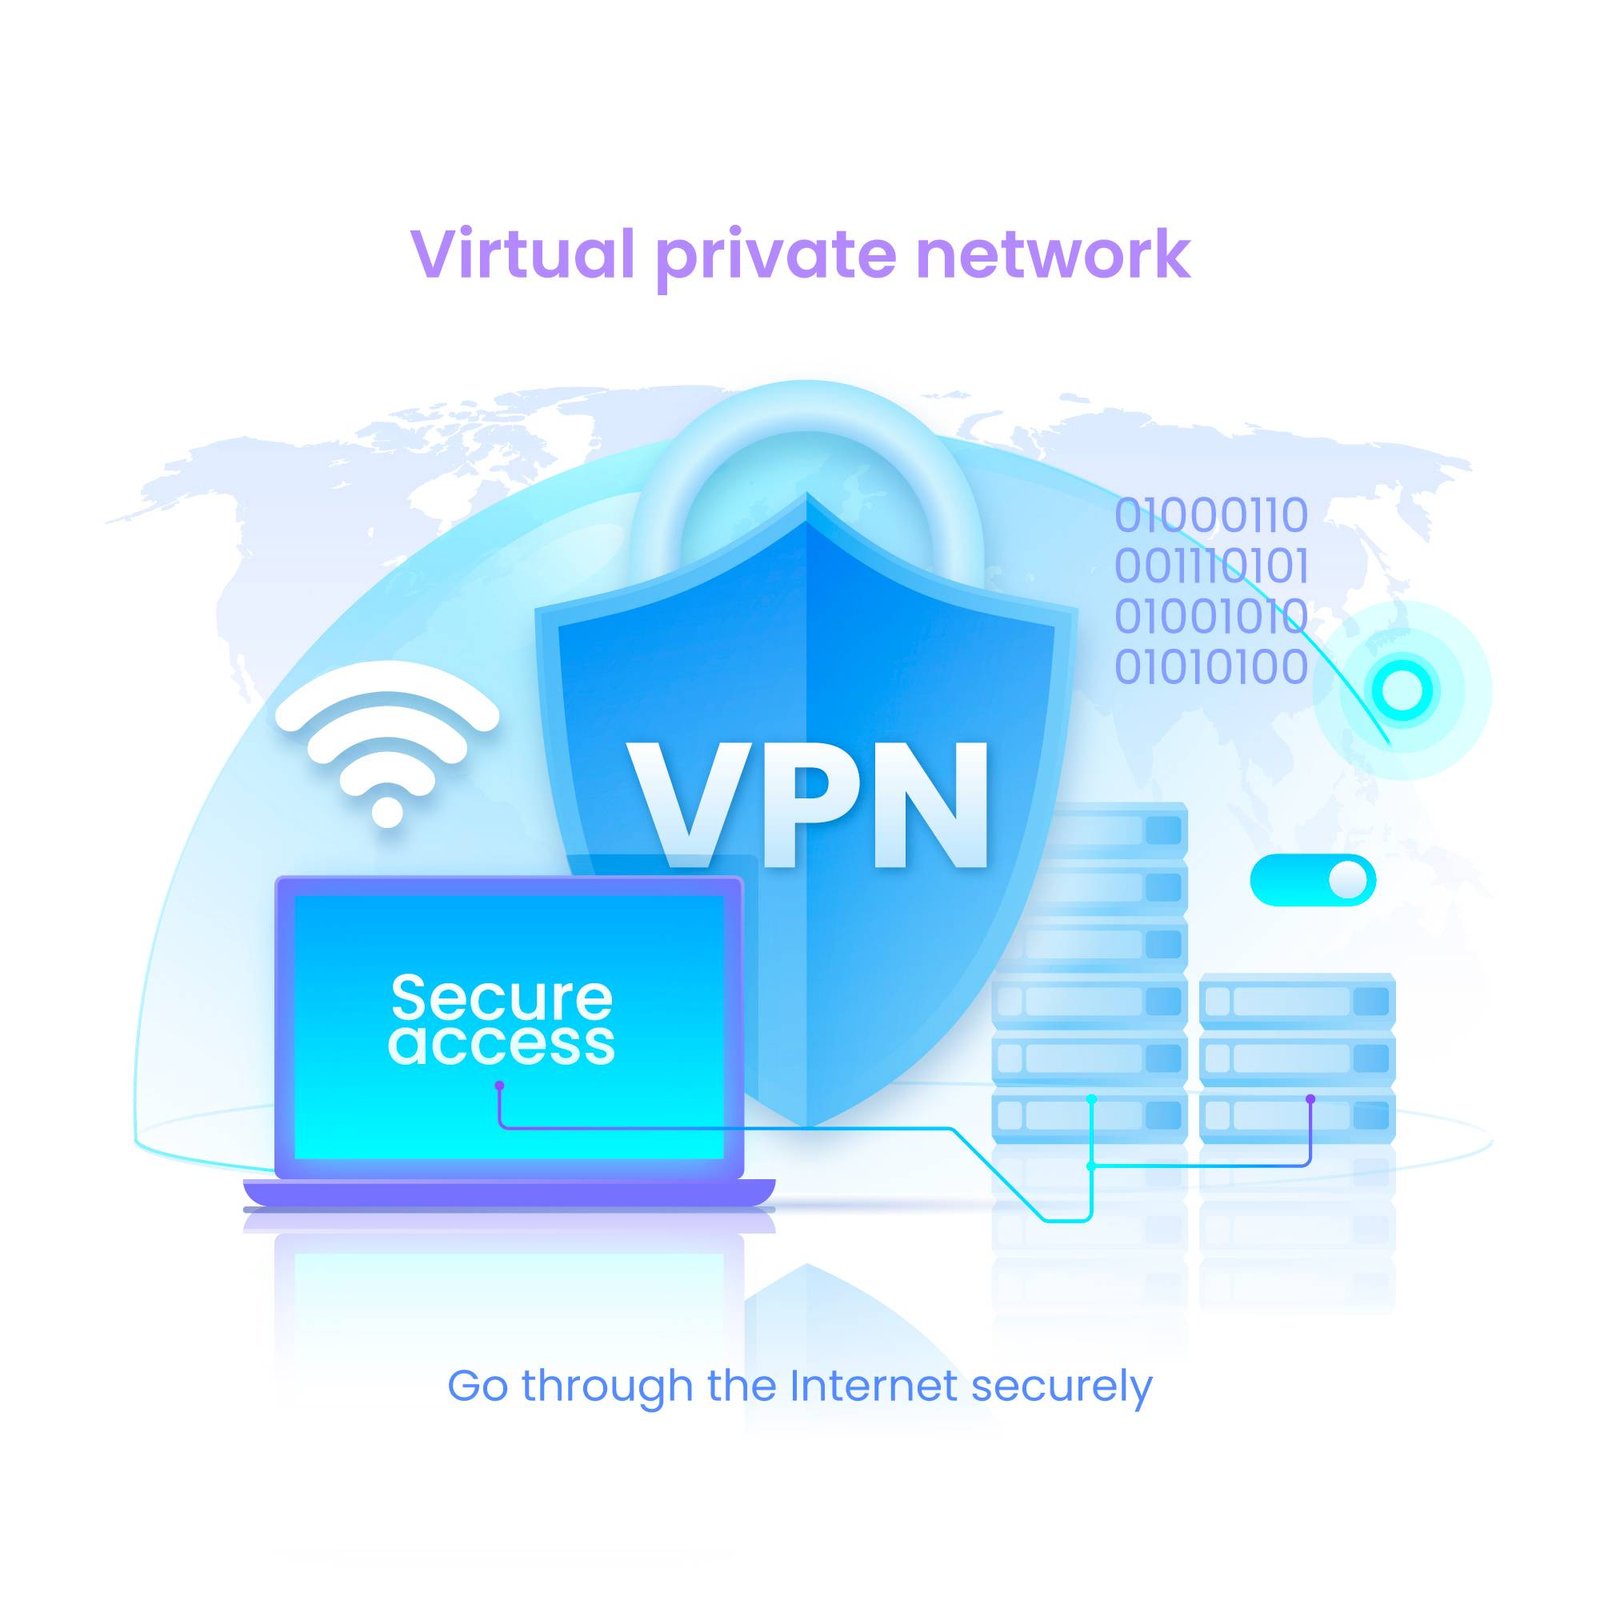 VPN Benefits: Navigating the Digital World Safely and Freely